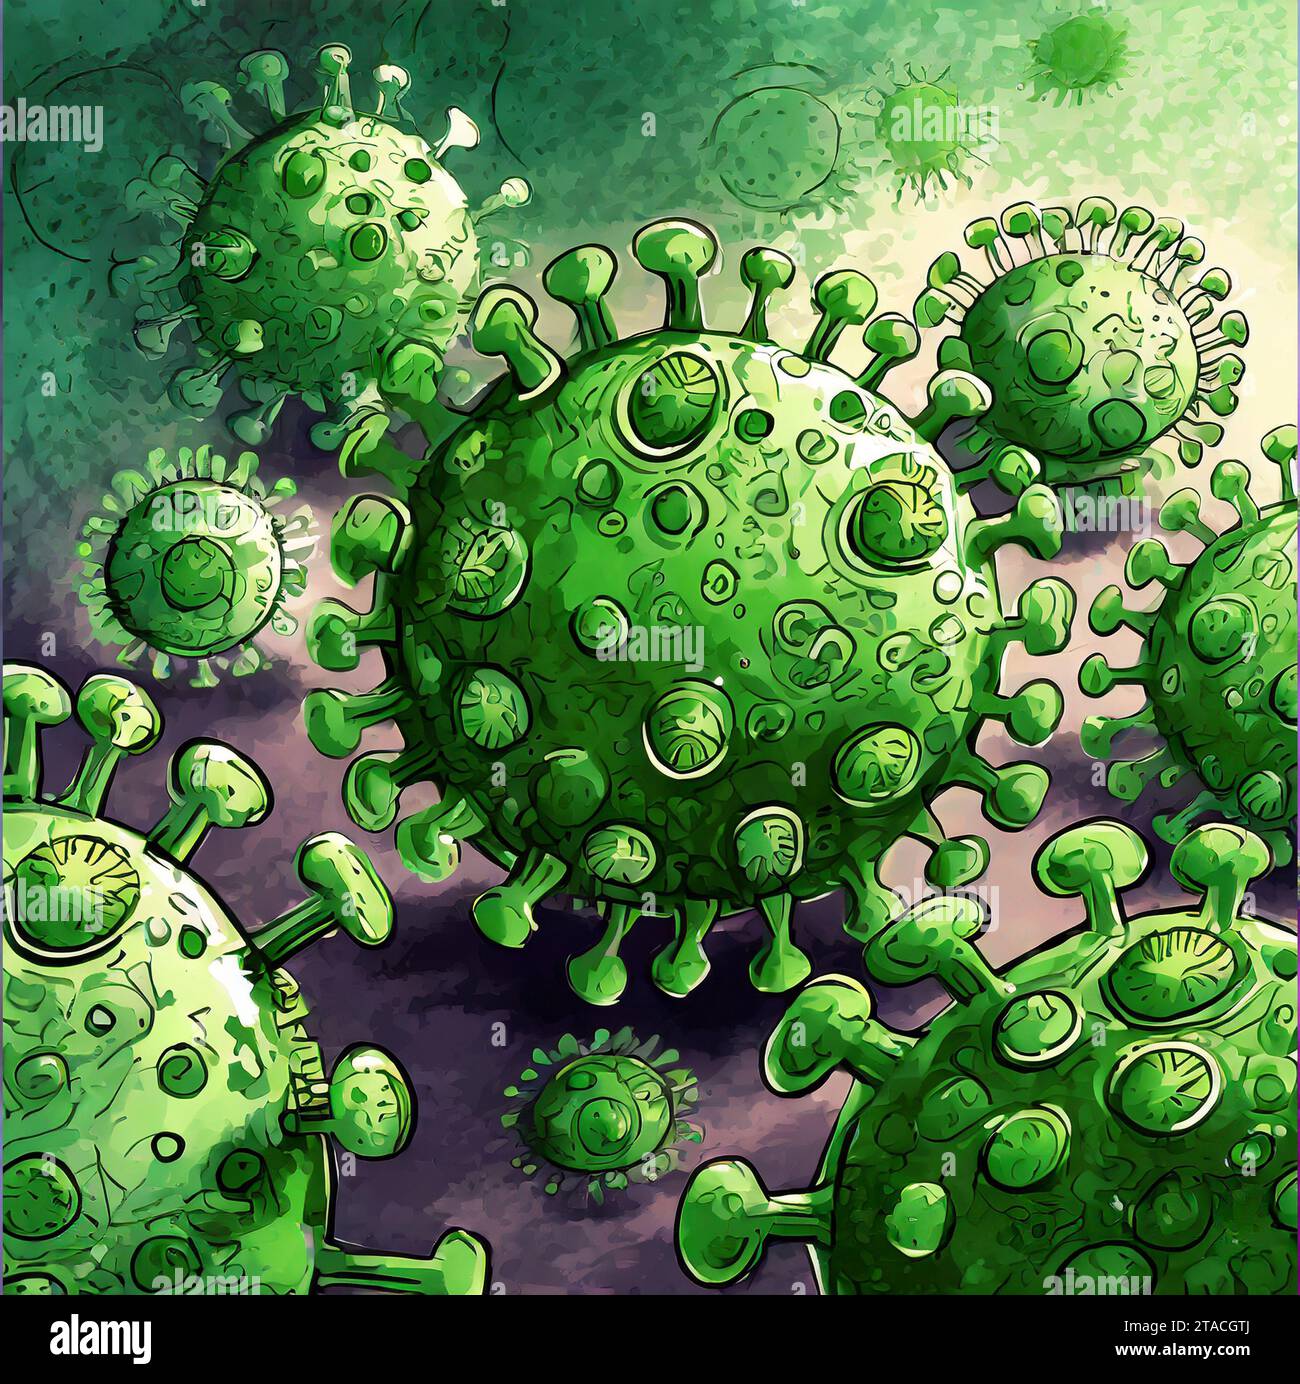 Virusvarianten Illustration Banque D'Images